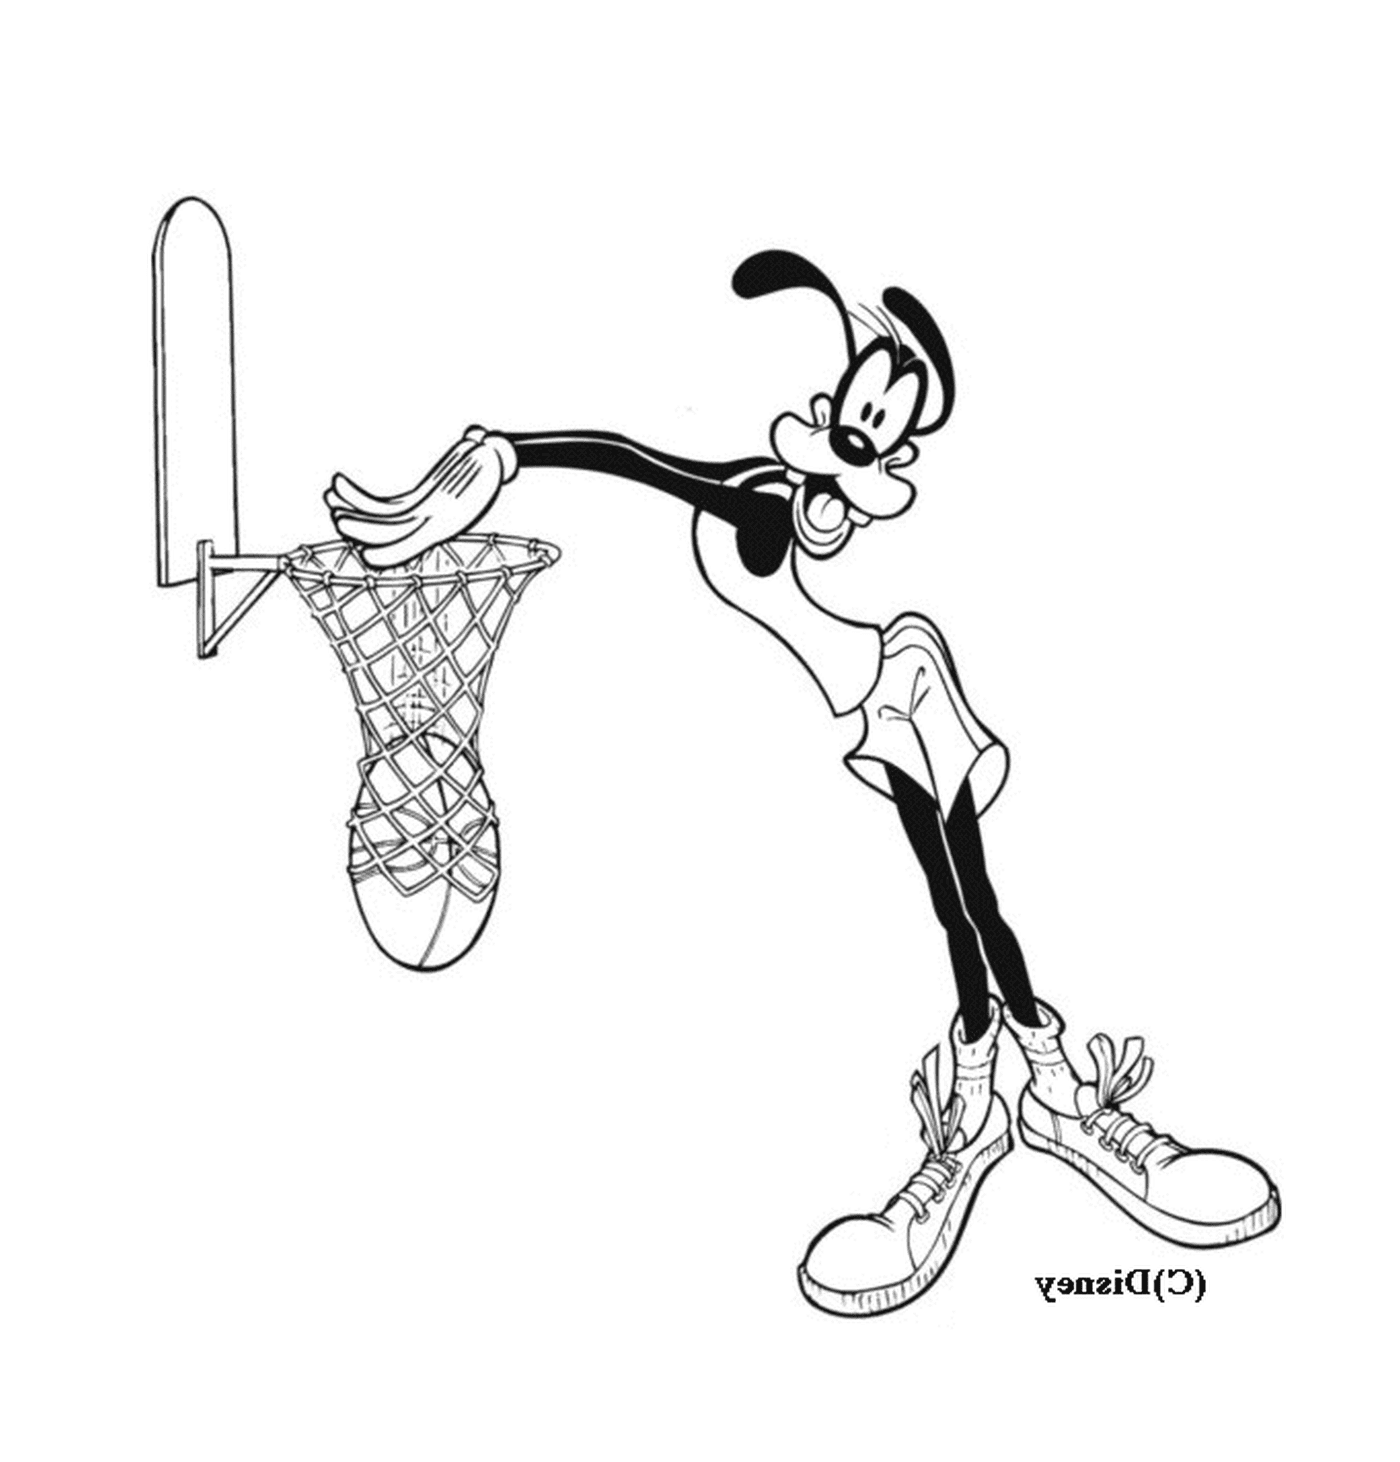  Dingo gioca a basket in un cartone animato 